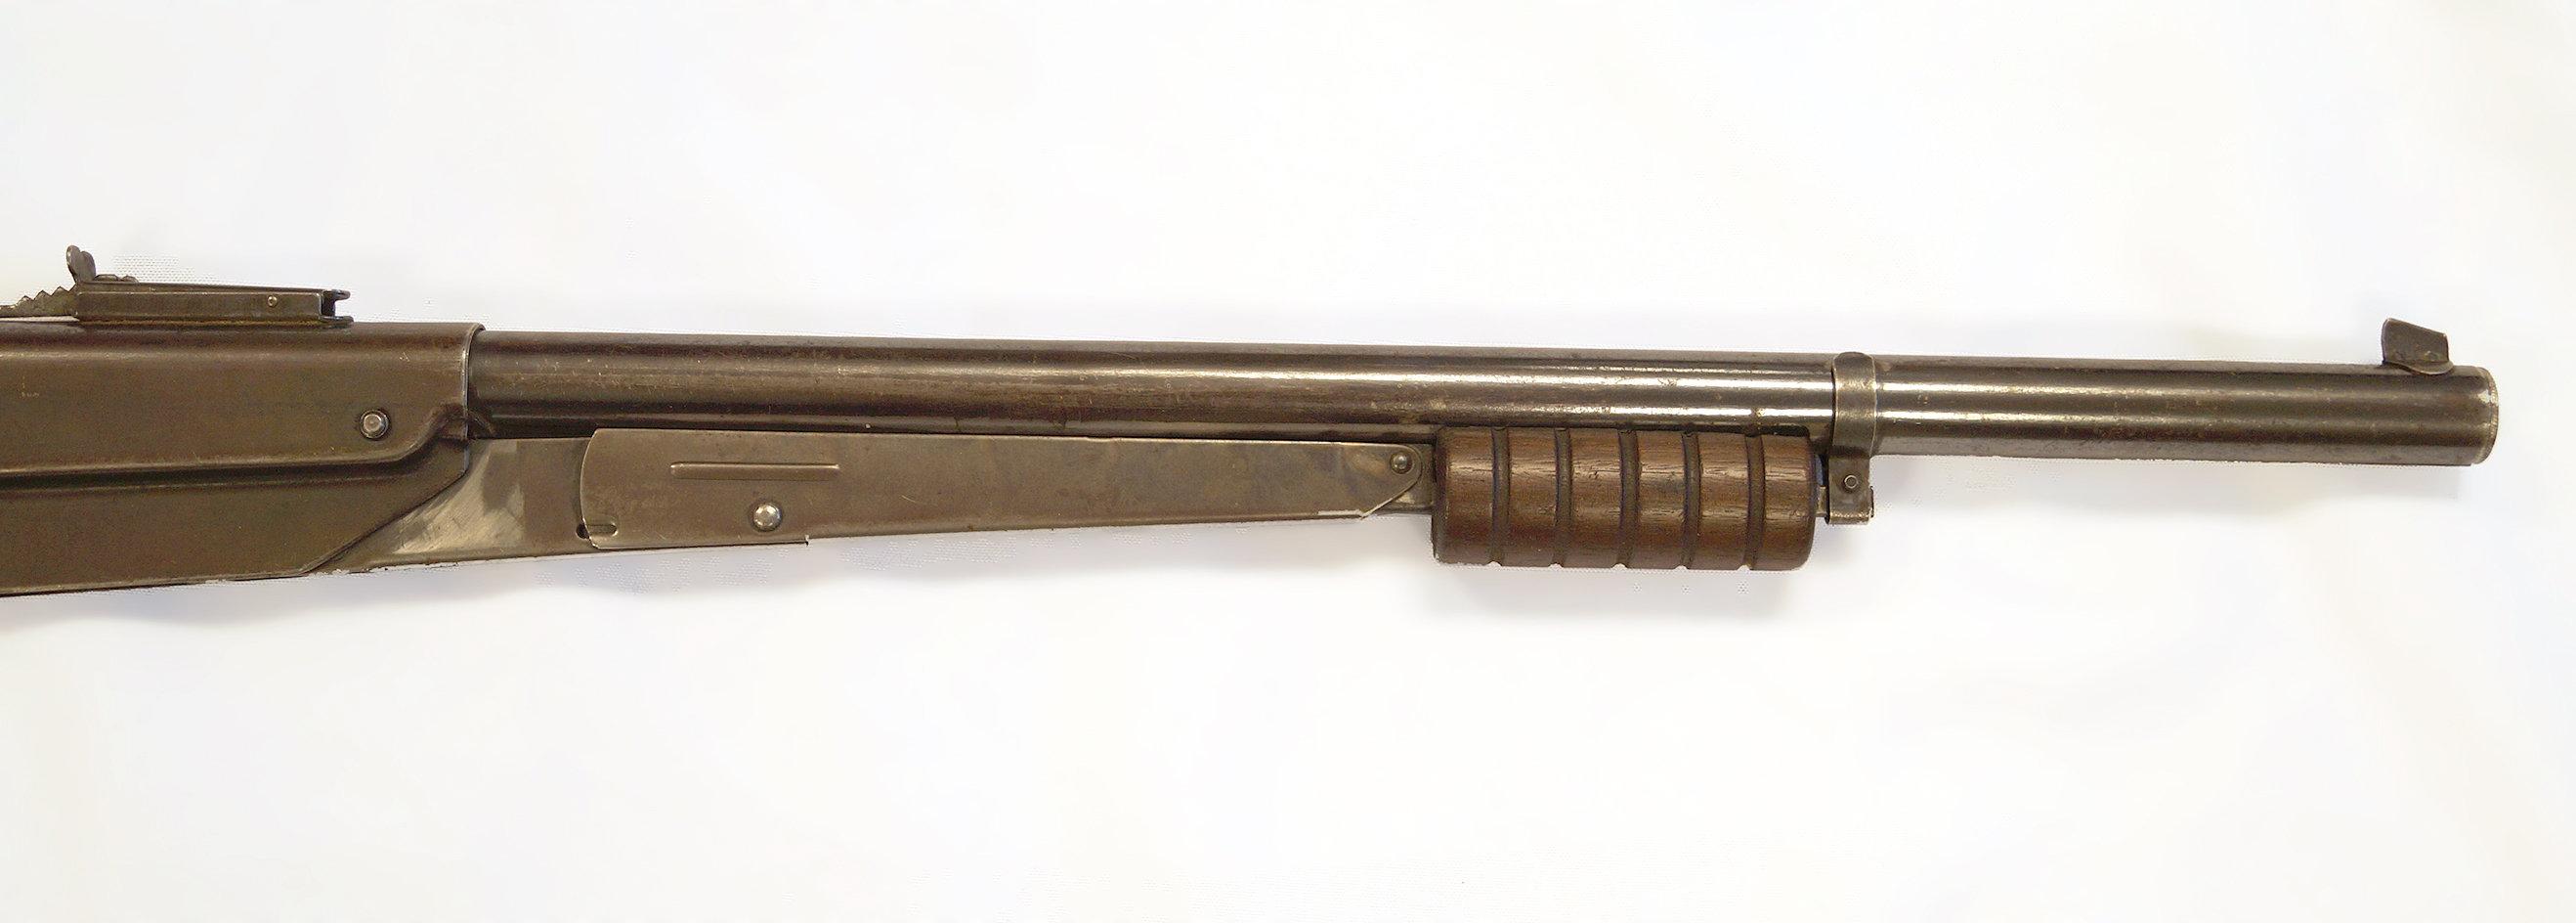 Daisy pump actionn BB Rifle with 4 tubes of Bbs.